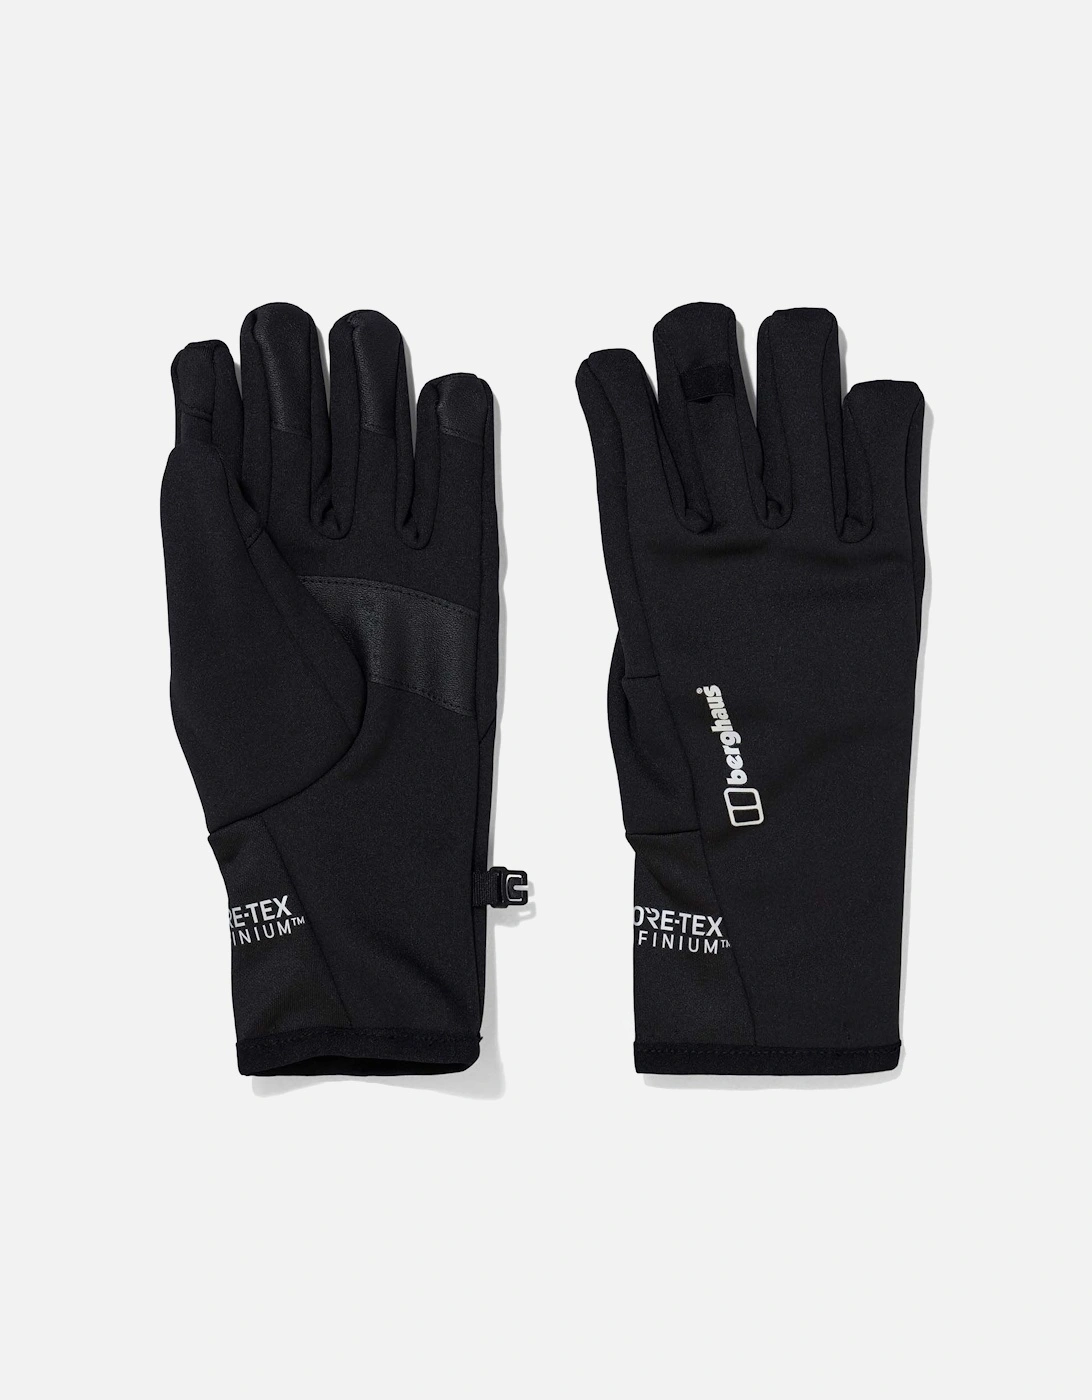 Hillmaster Infinium Gloves, 6 of 5